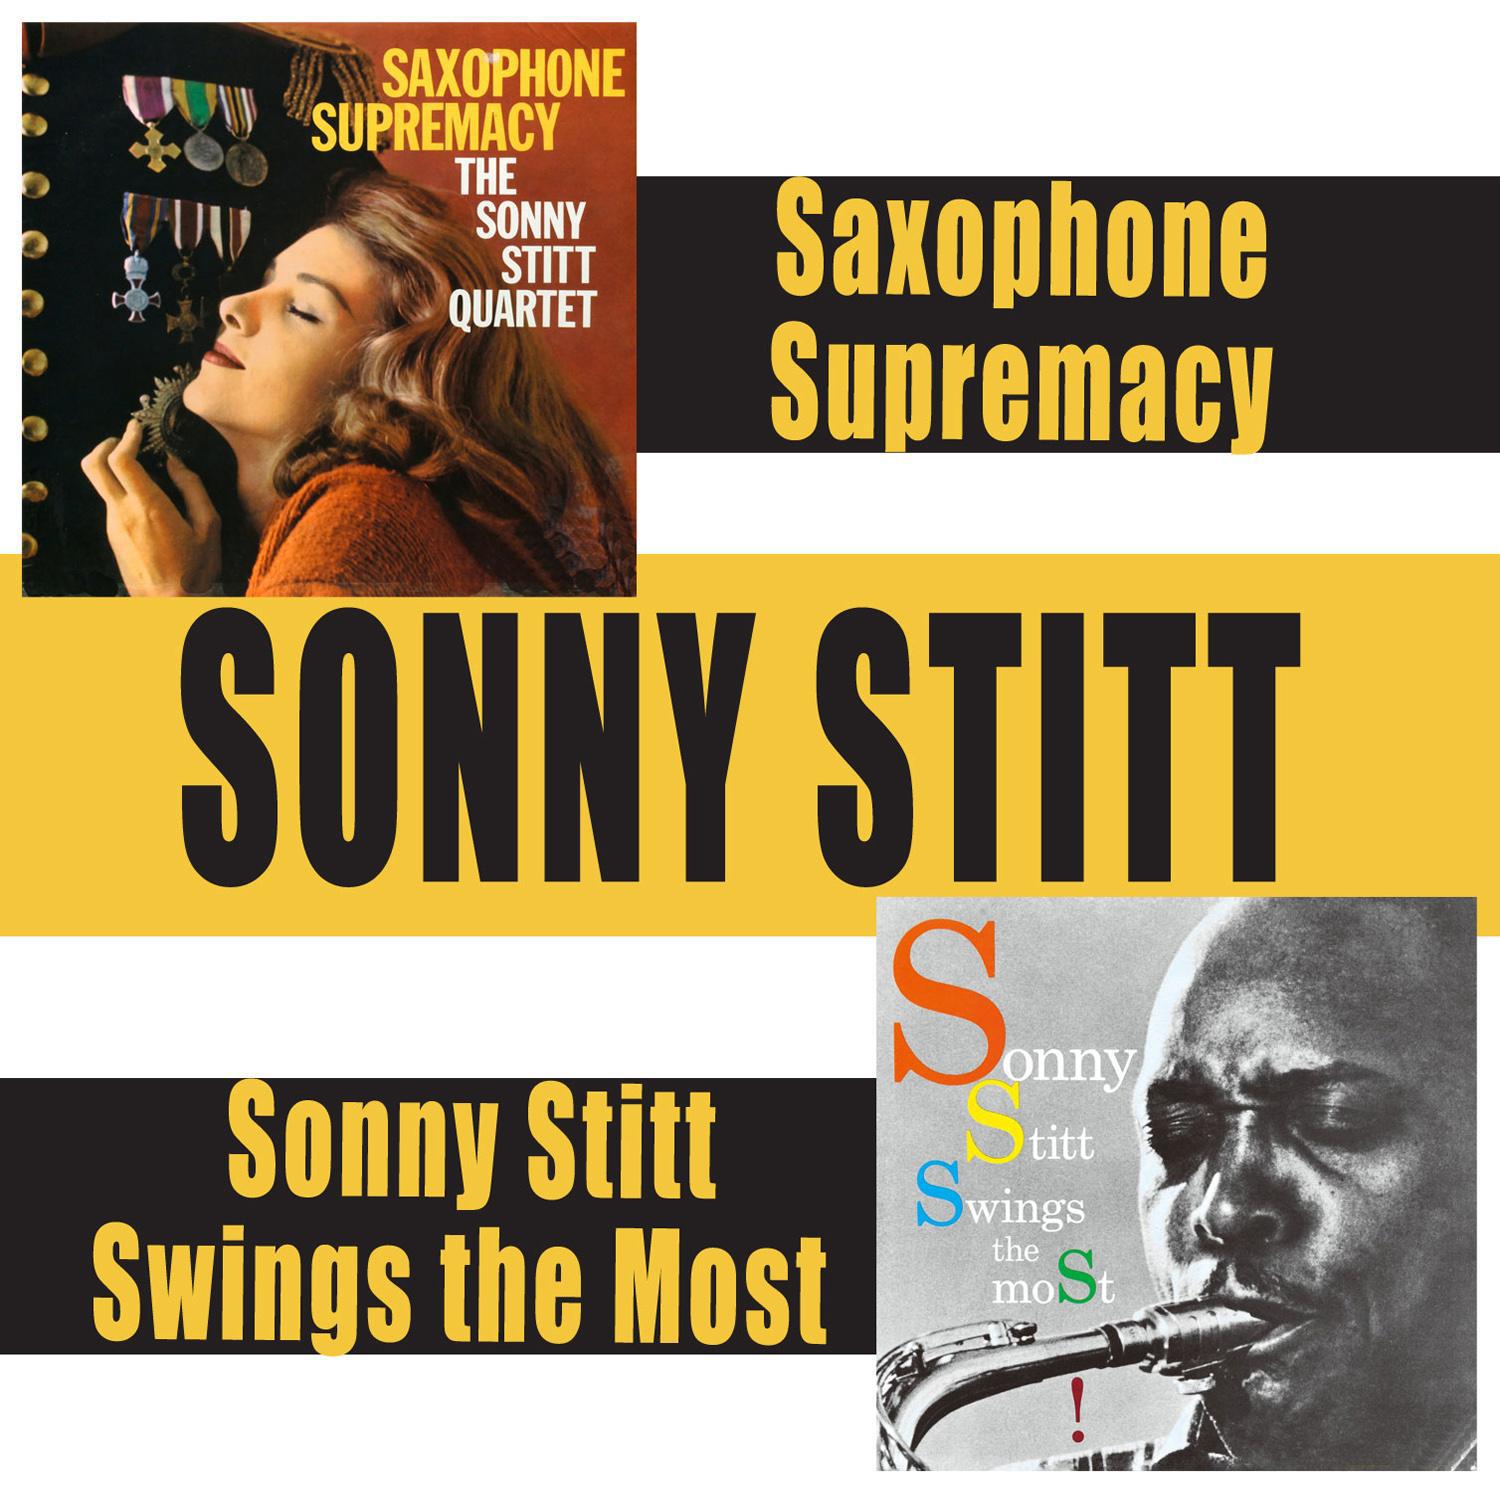 Saxophone Supremacy + Sonny Stitt Swings the Most